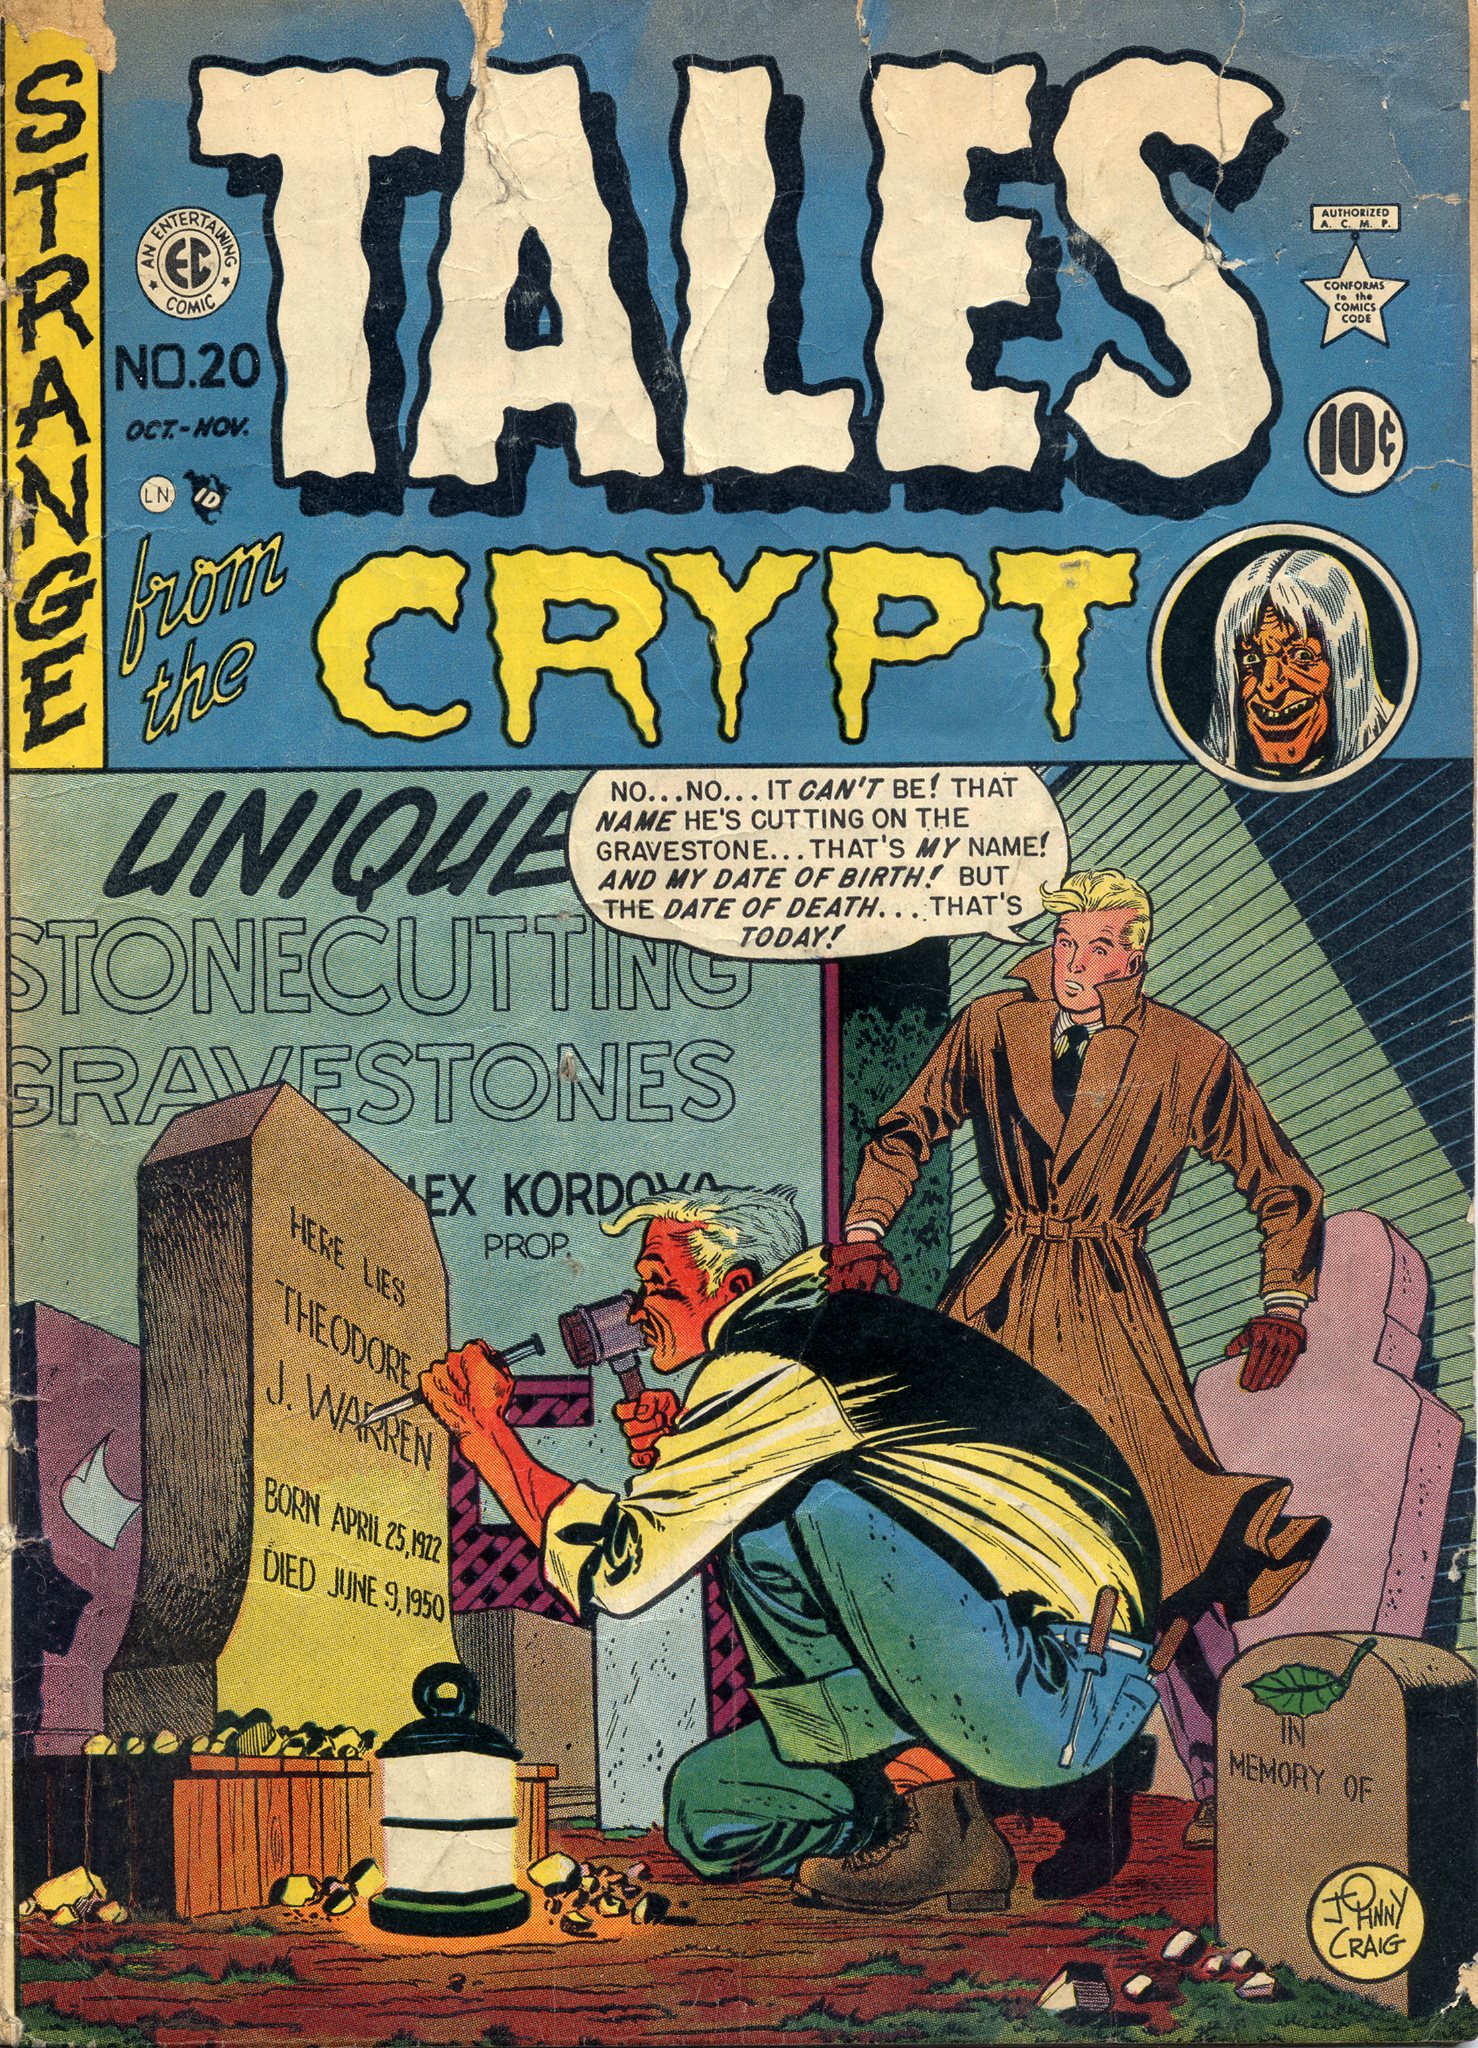 Tales from the Crypt Vol 1 20 | EC Comics Wiki | Fandom